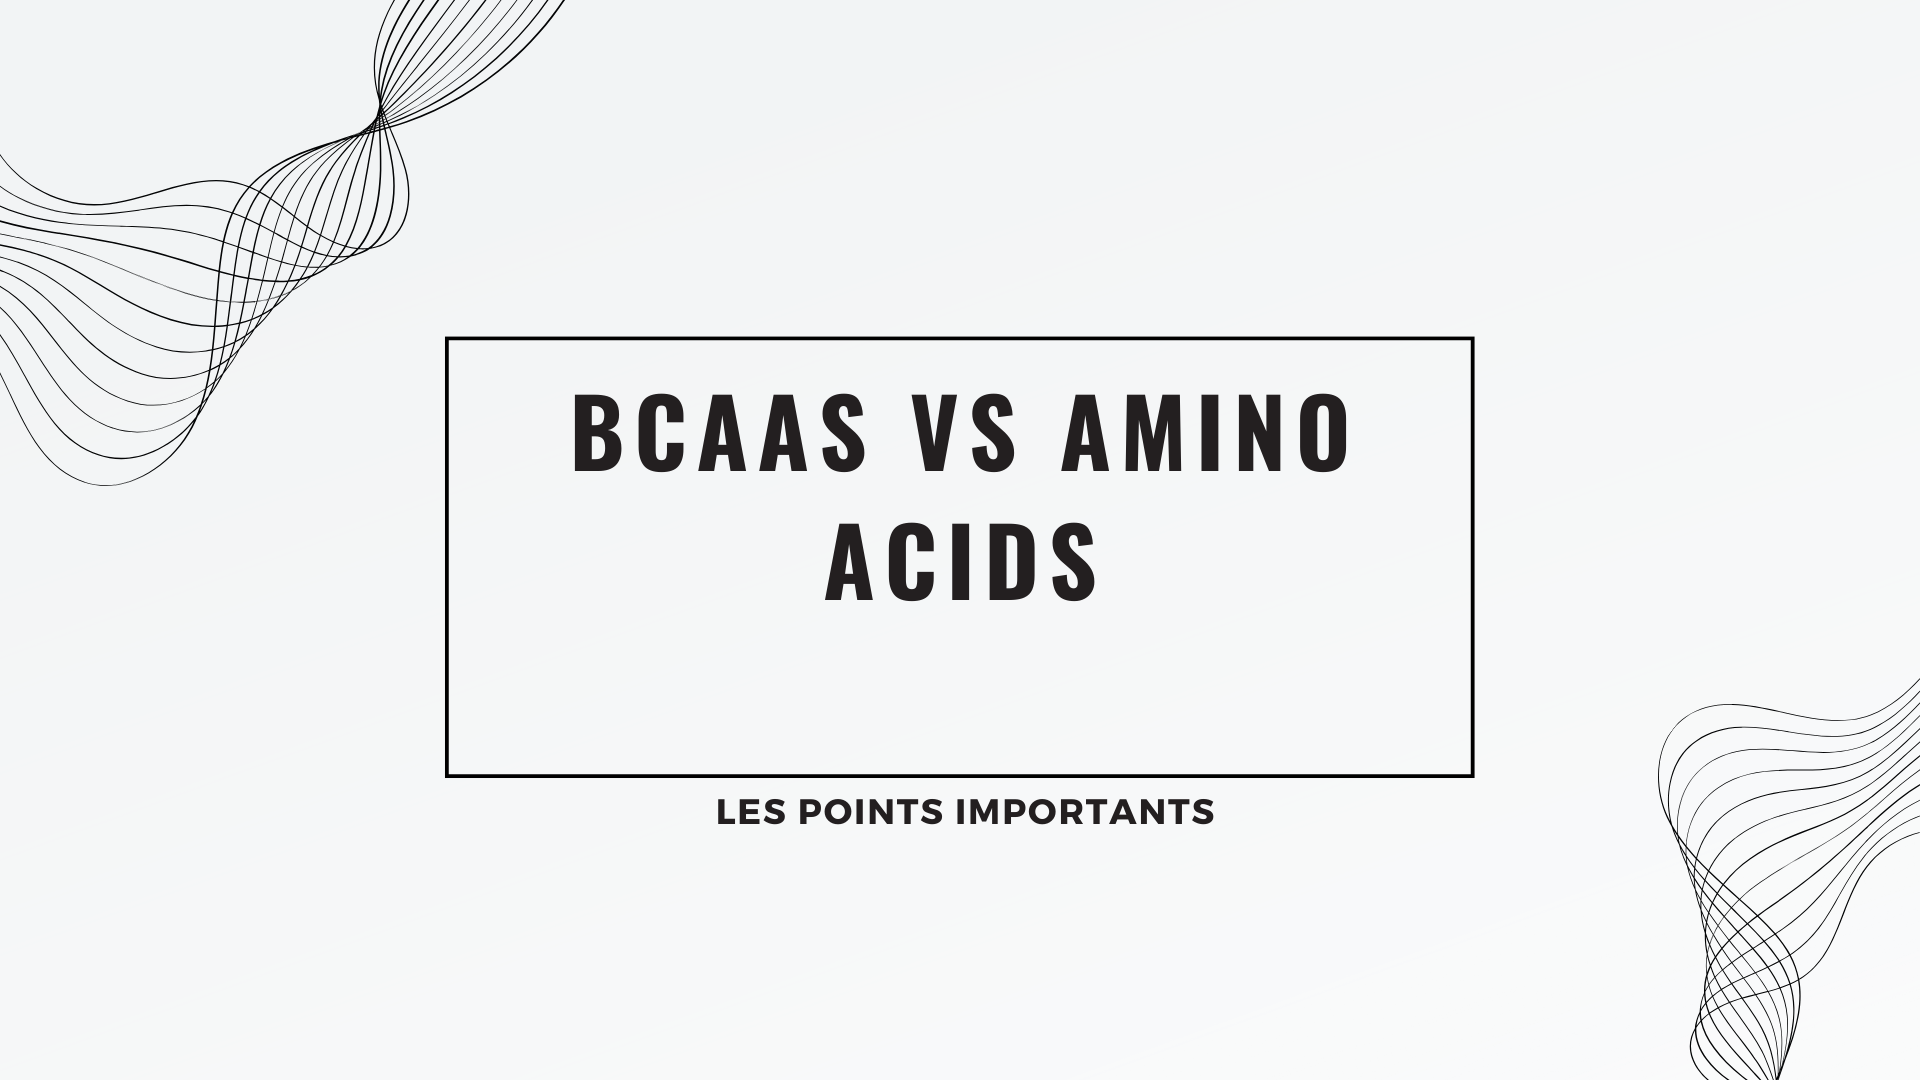 bcaas vs amino acids | Les points importants